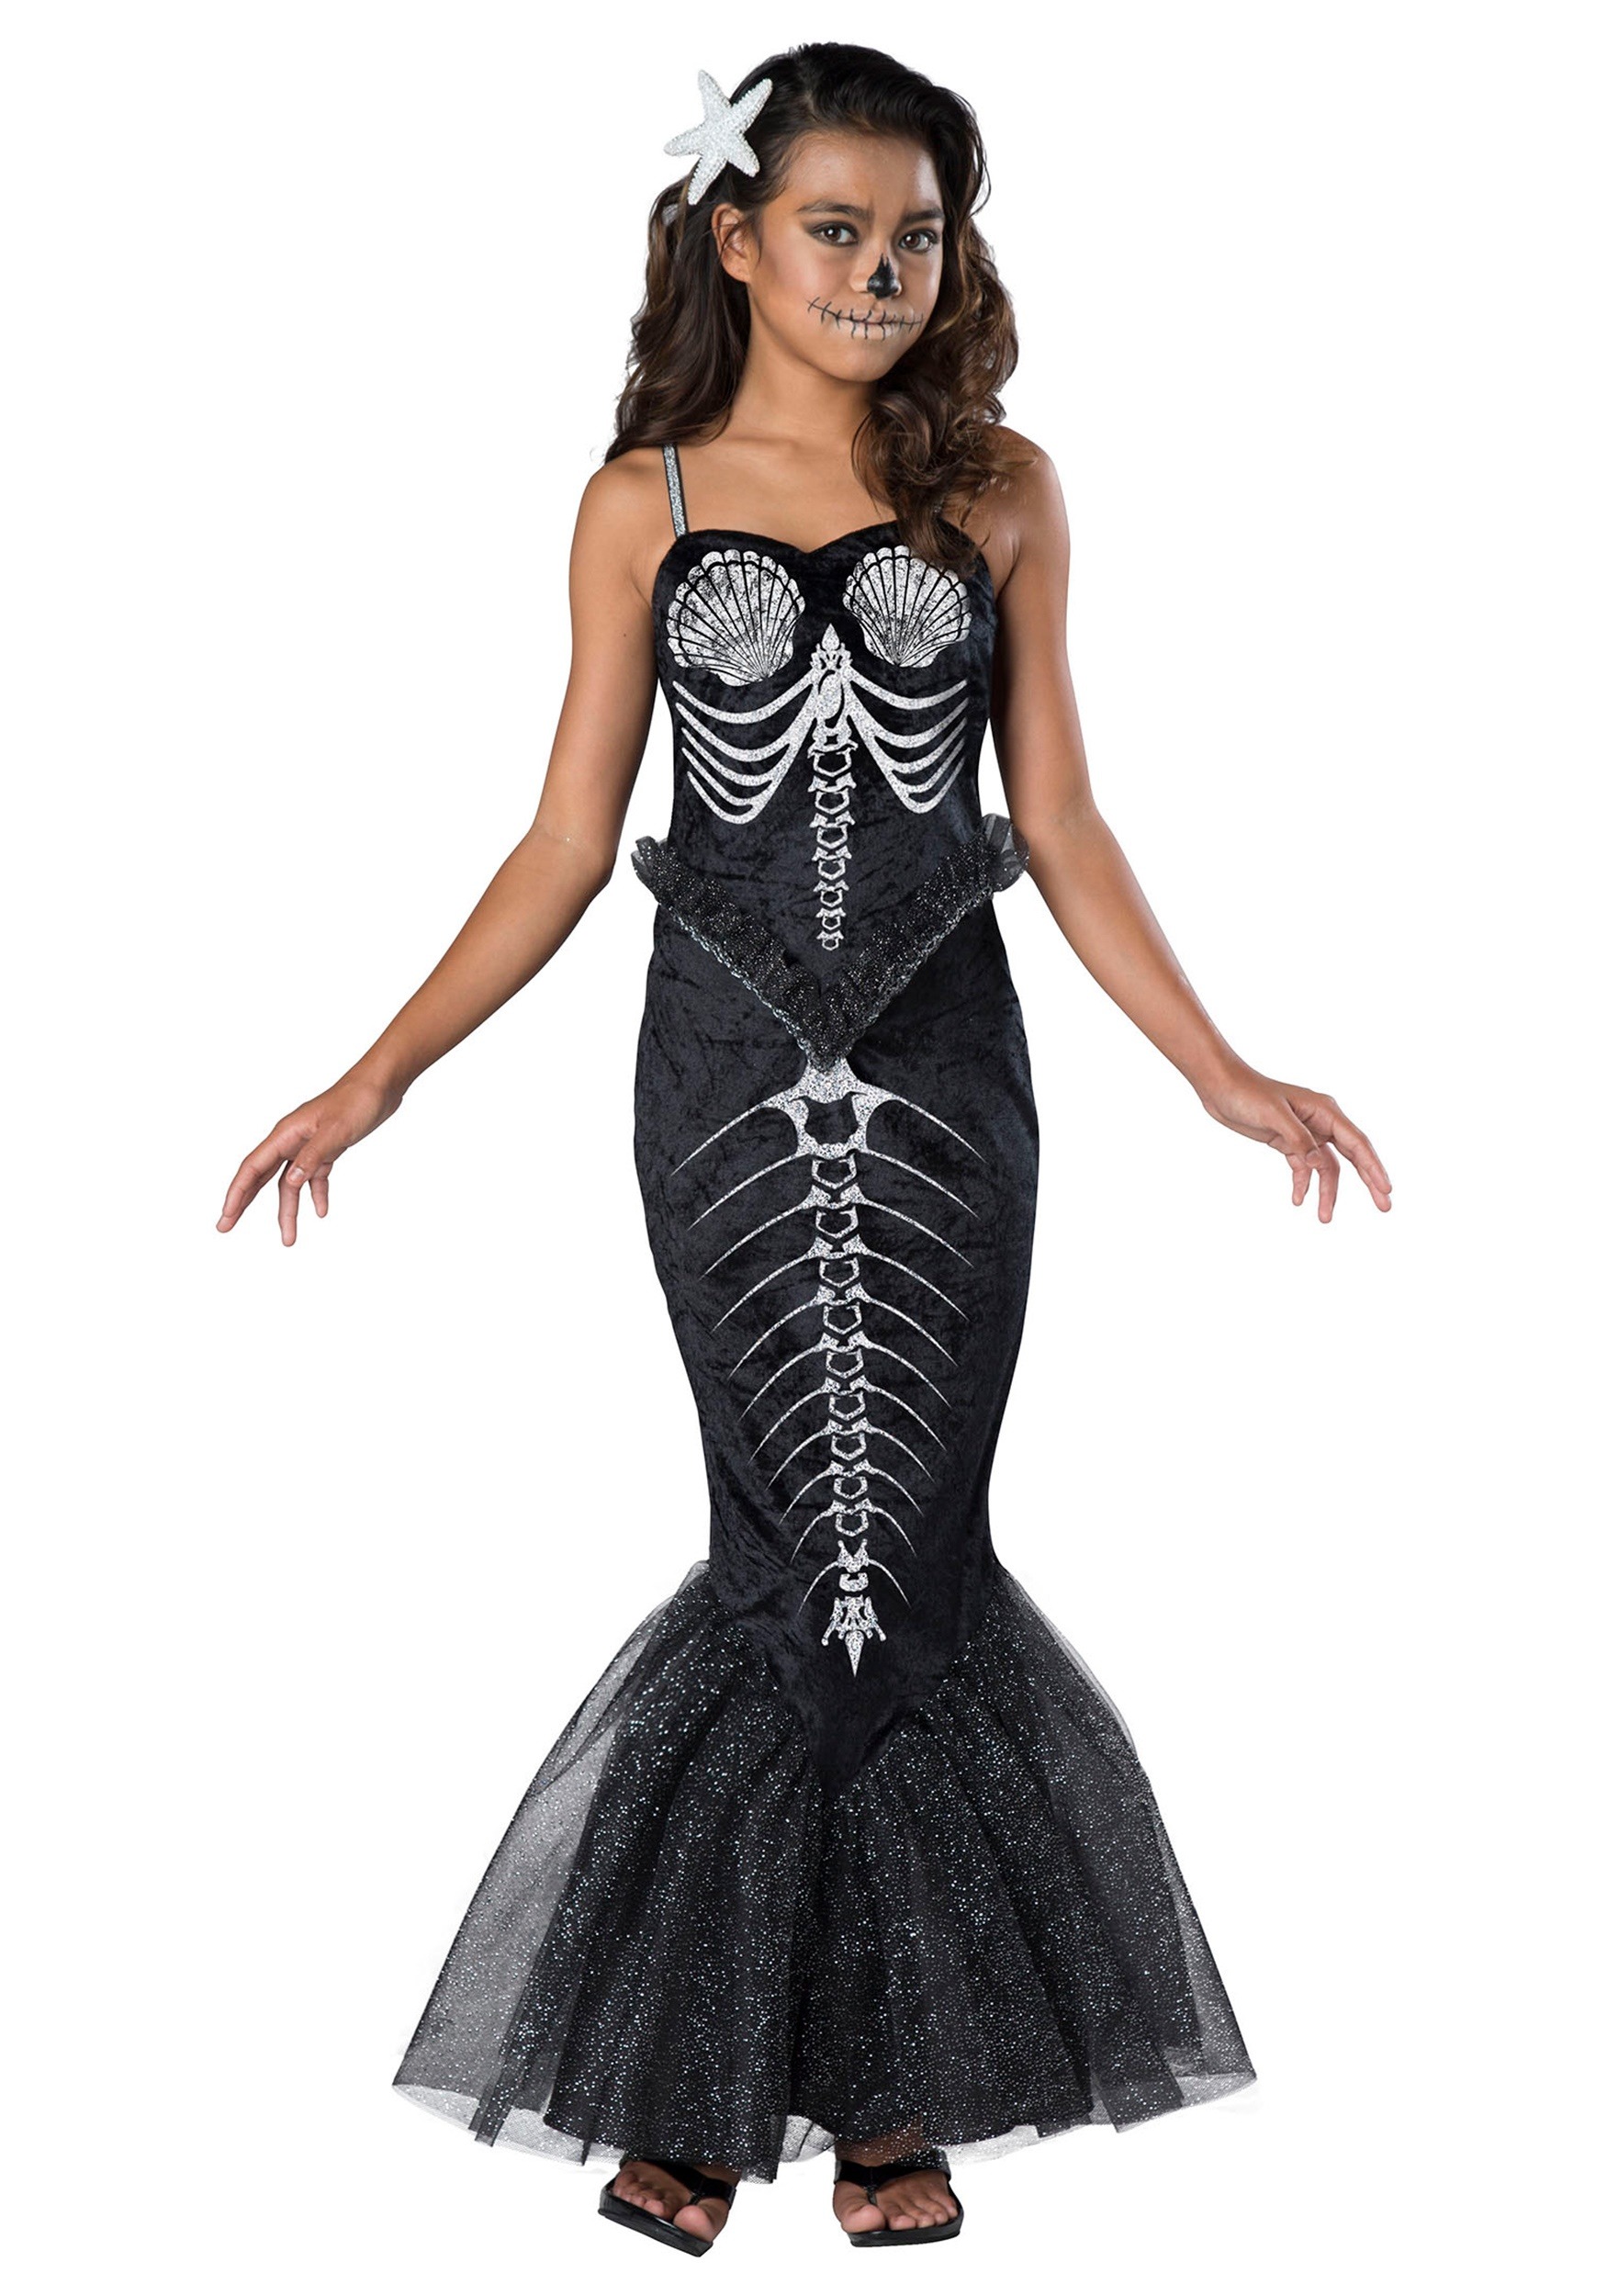 Girl’s Skeleton Mermaid Costume